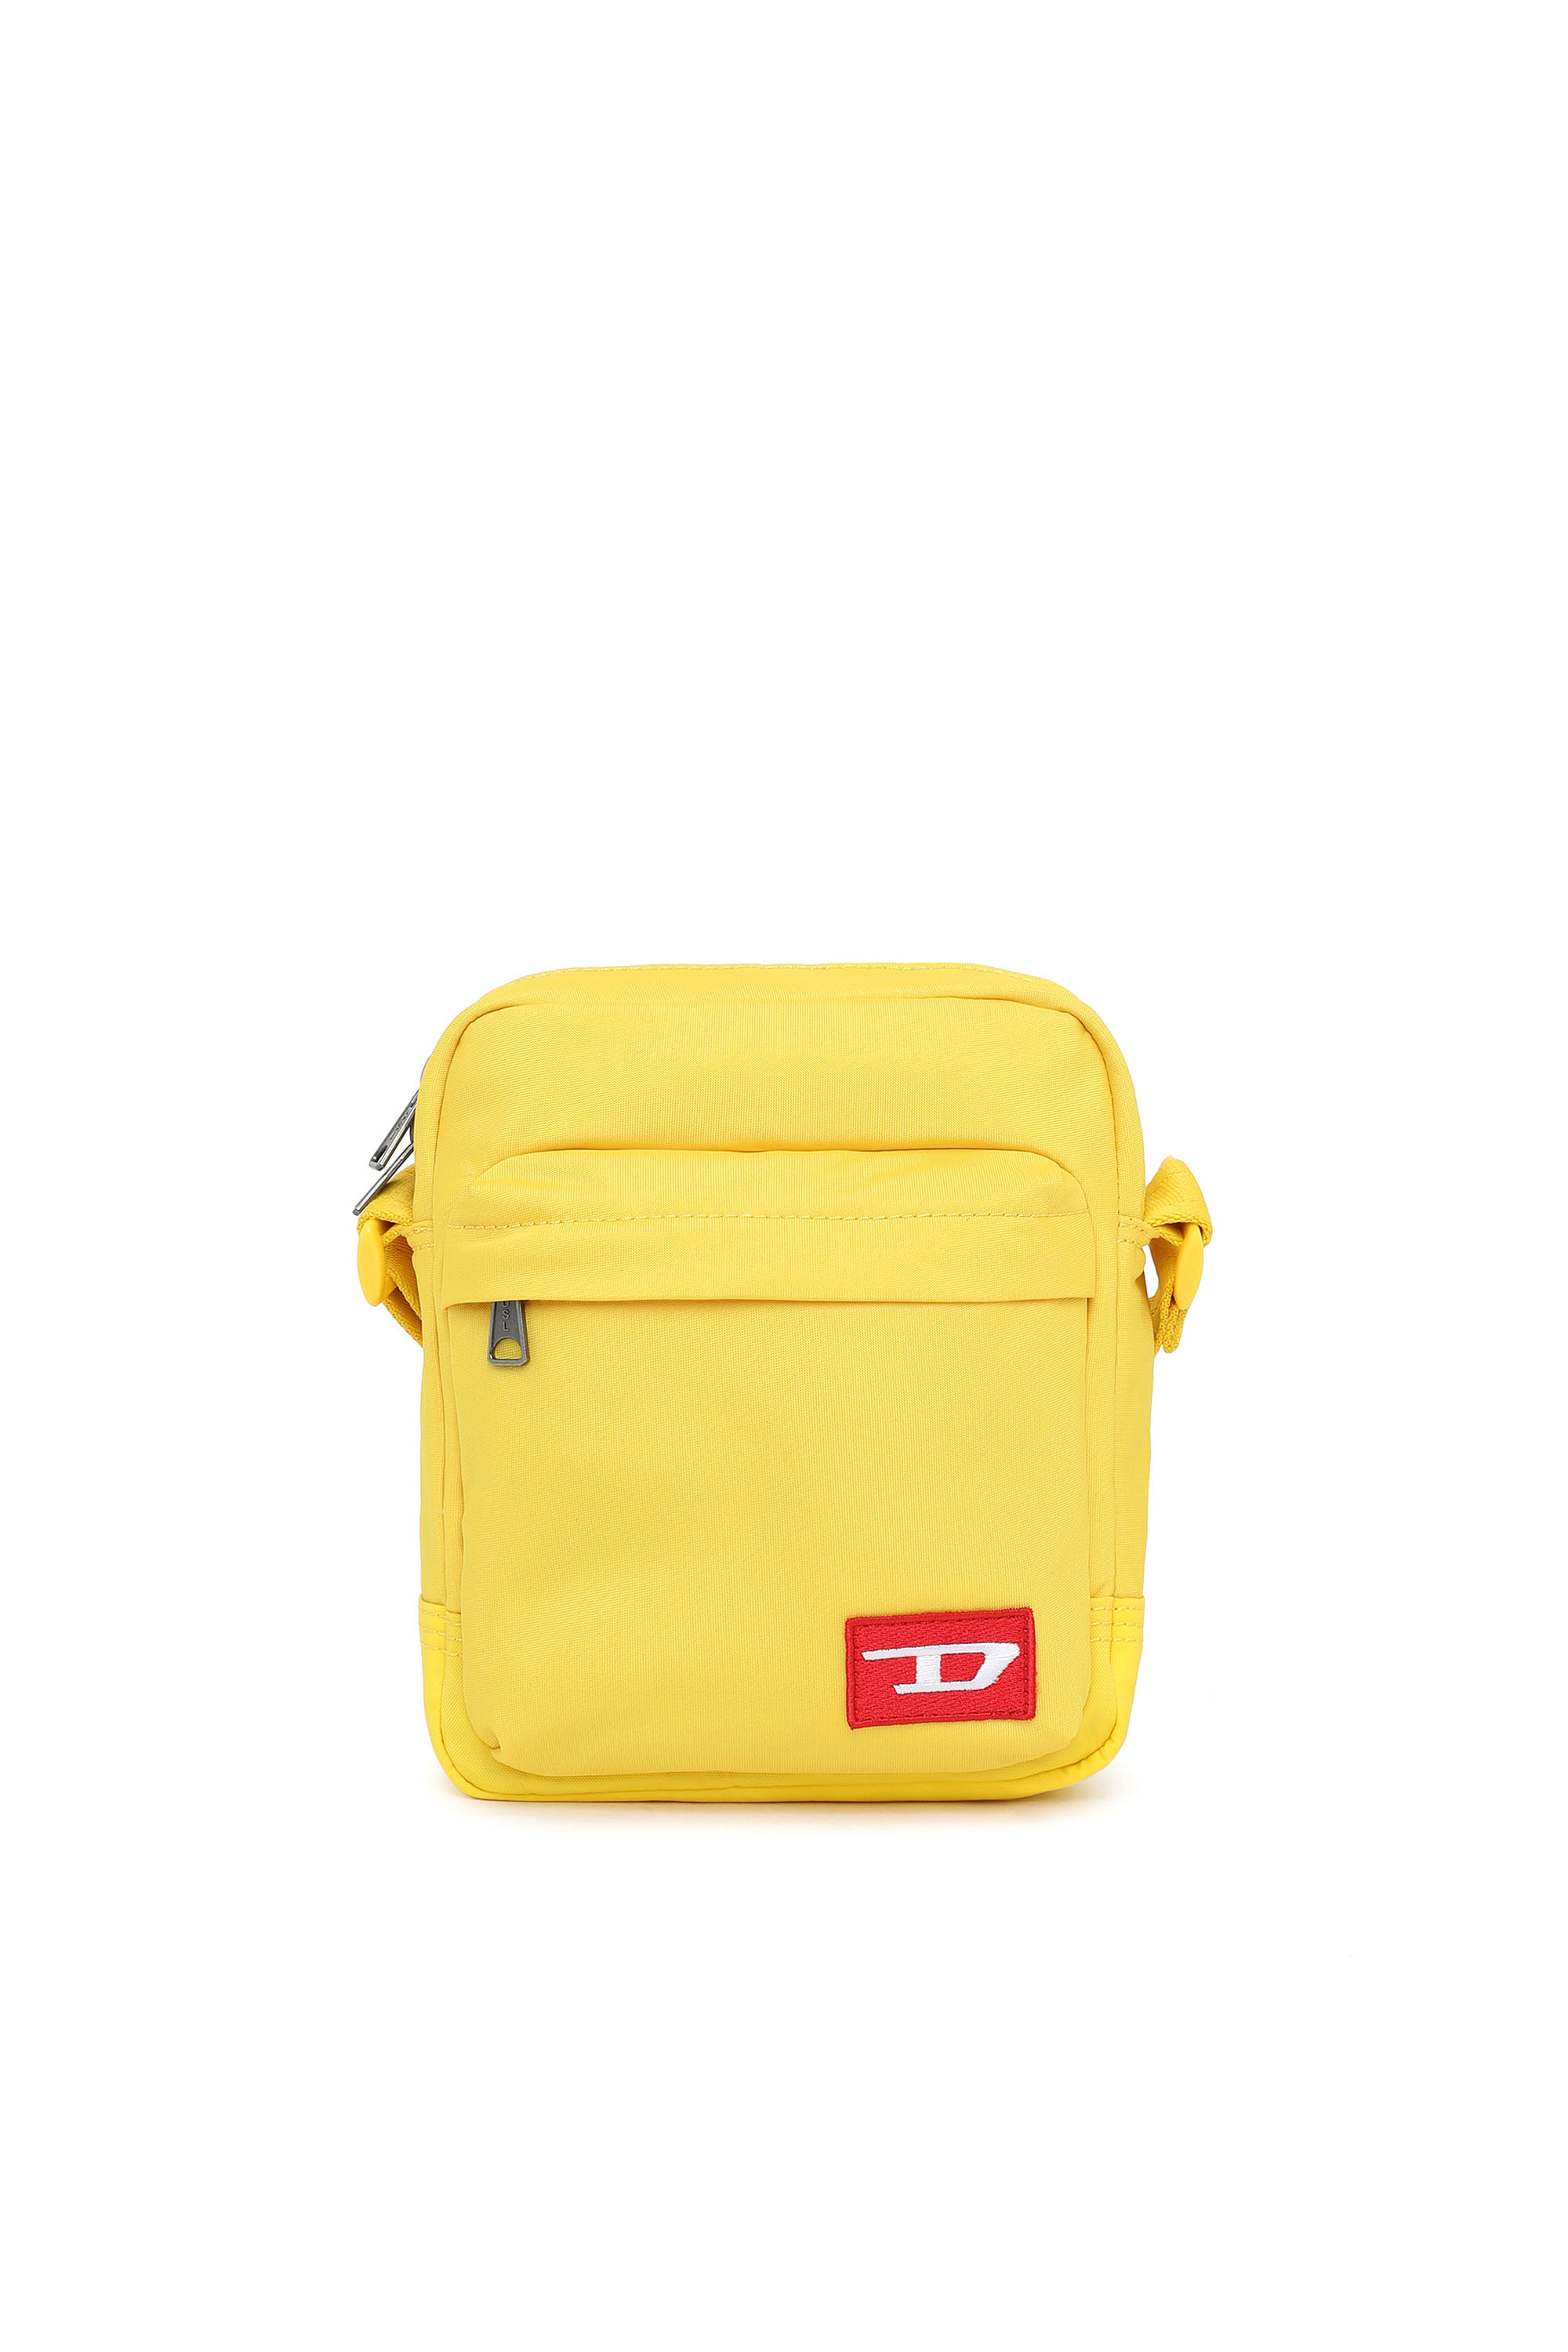 WARE, Yellow - Crossbody Bags